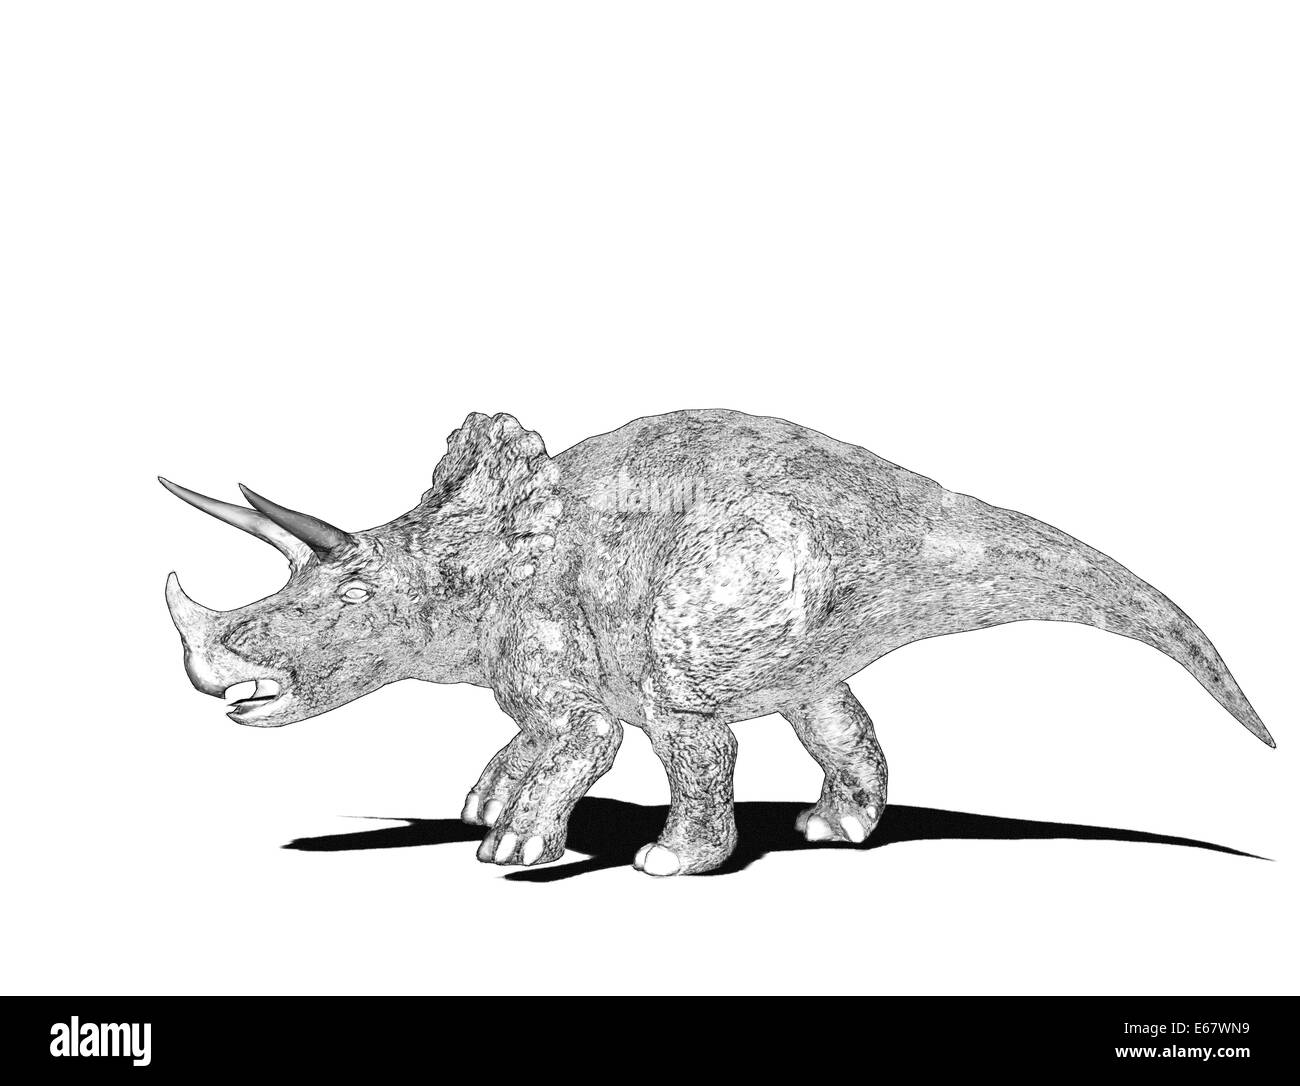 Dinosaurier Triceratops / dinosaur Triceratops Stock Photo